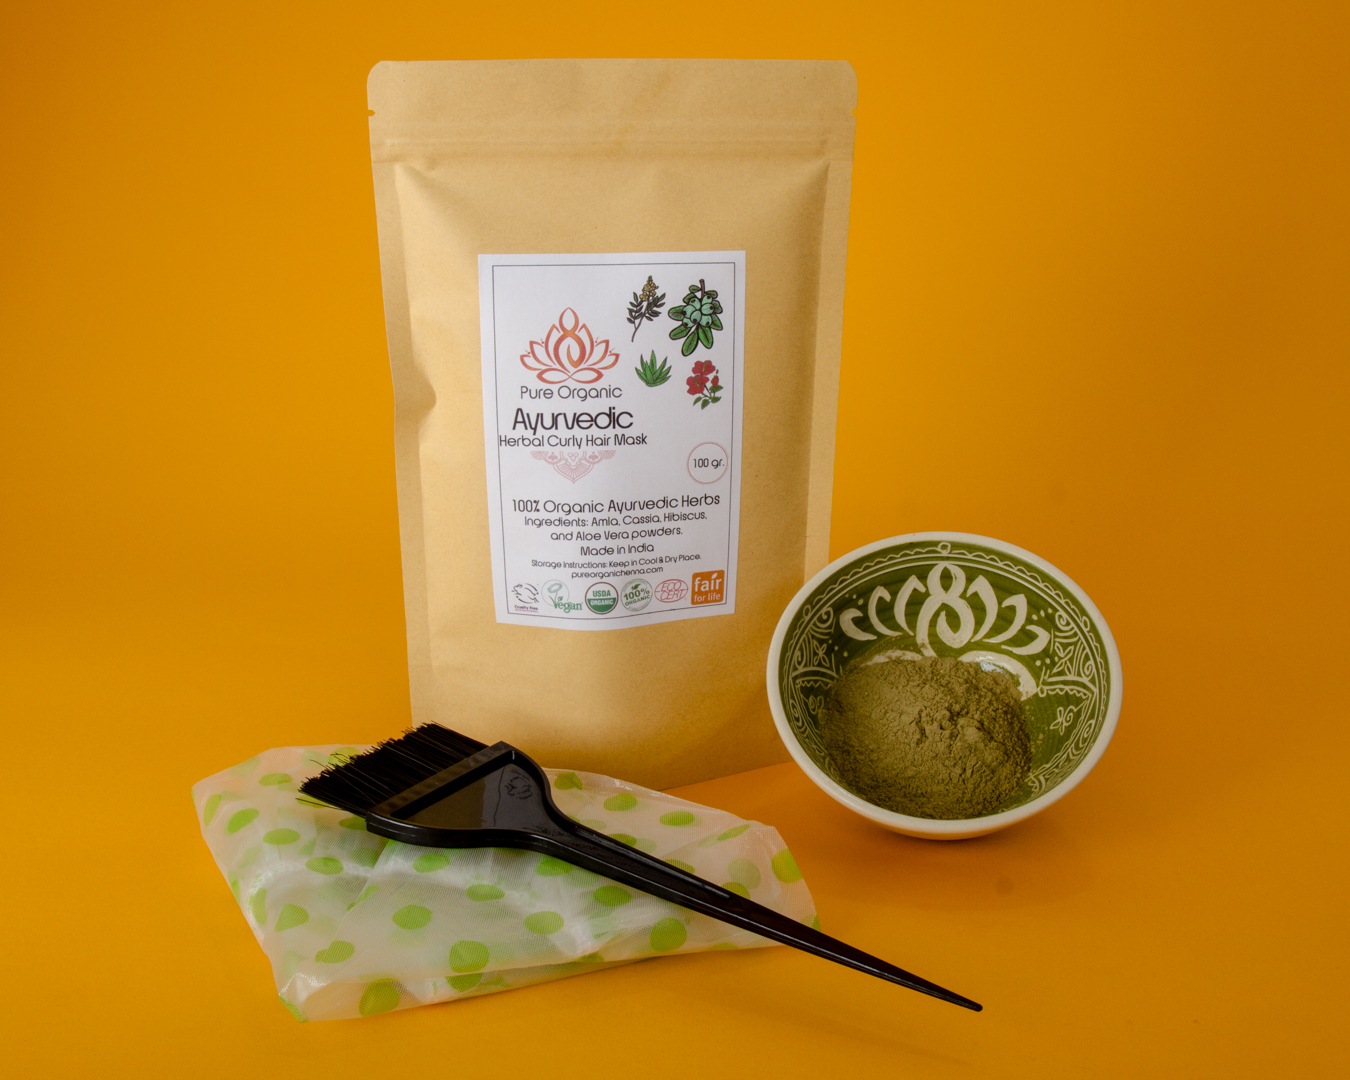 Pure Organic Ayurvedic Herbal Hair Mask – Shankhpushpi – Pure Organic Henna